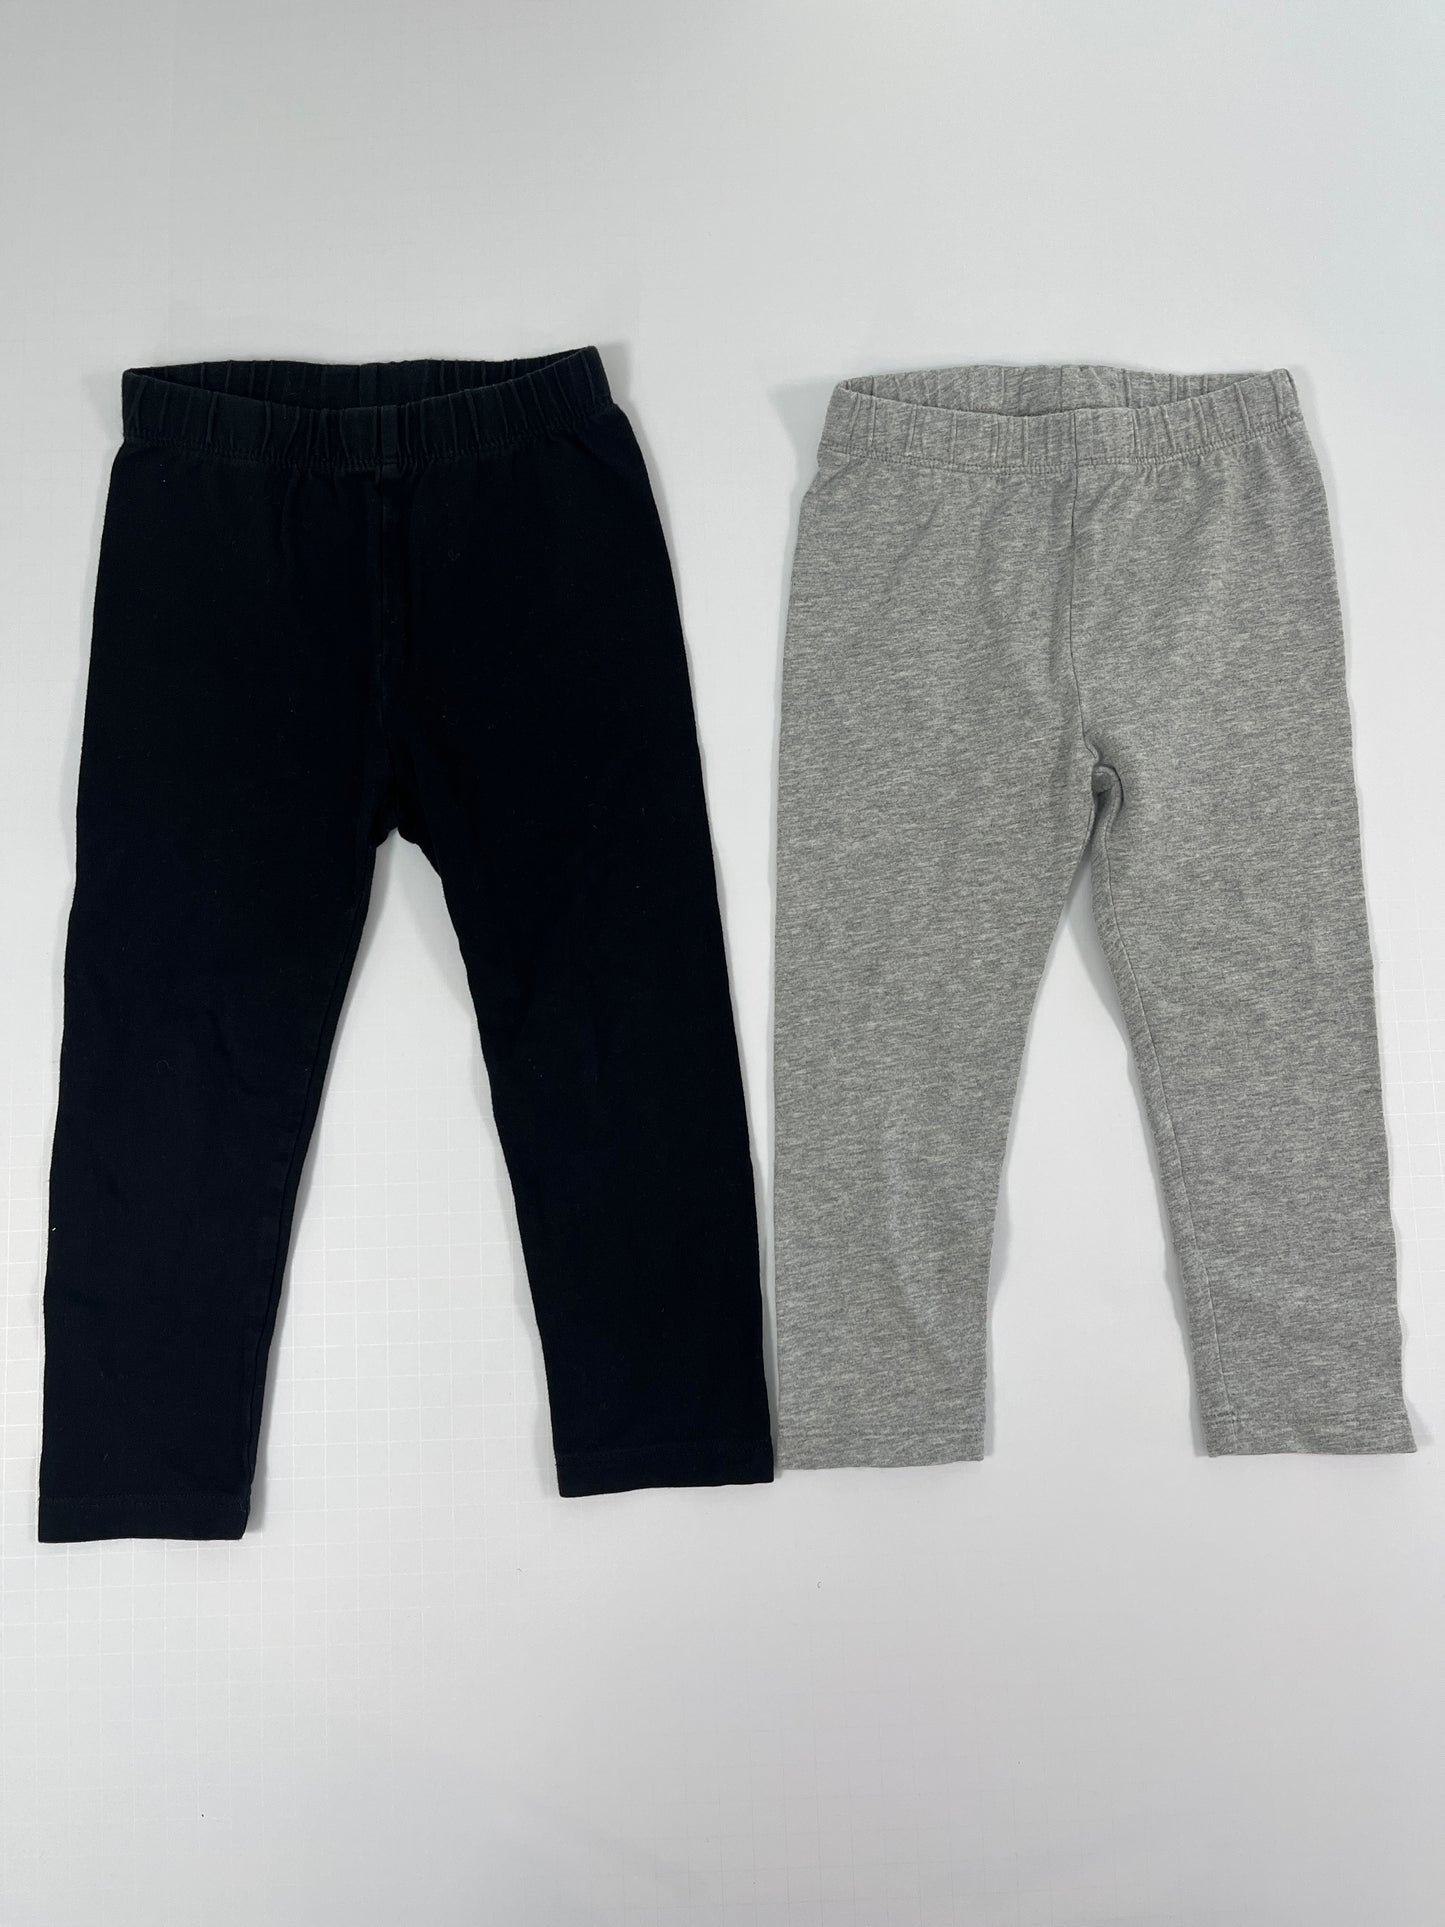 PPU 45242 2T girls baby gap black/grey leggings bundle (2)